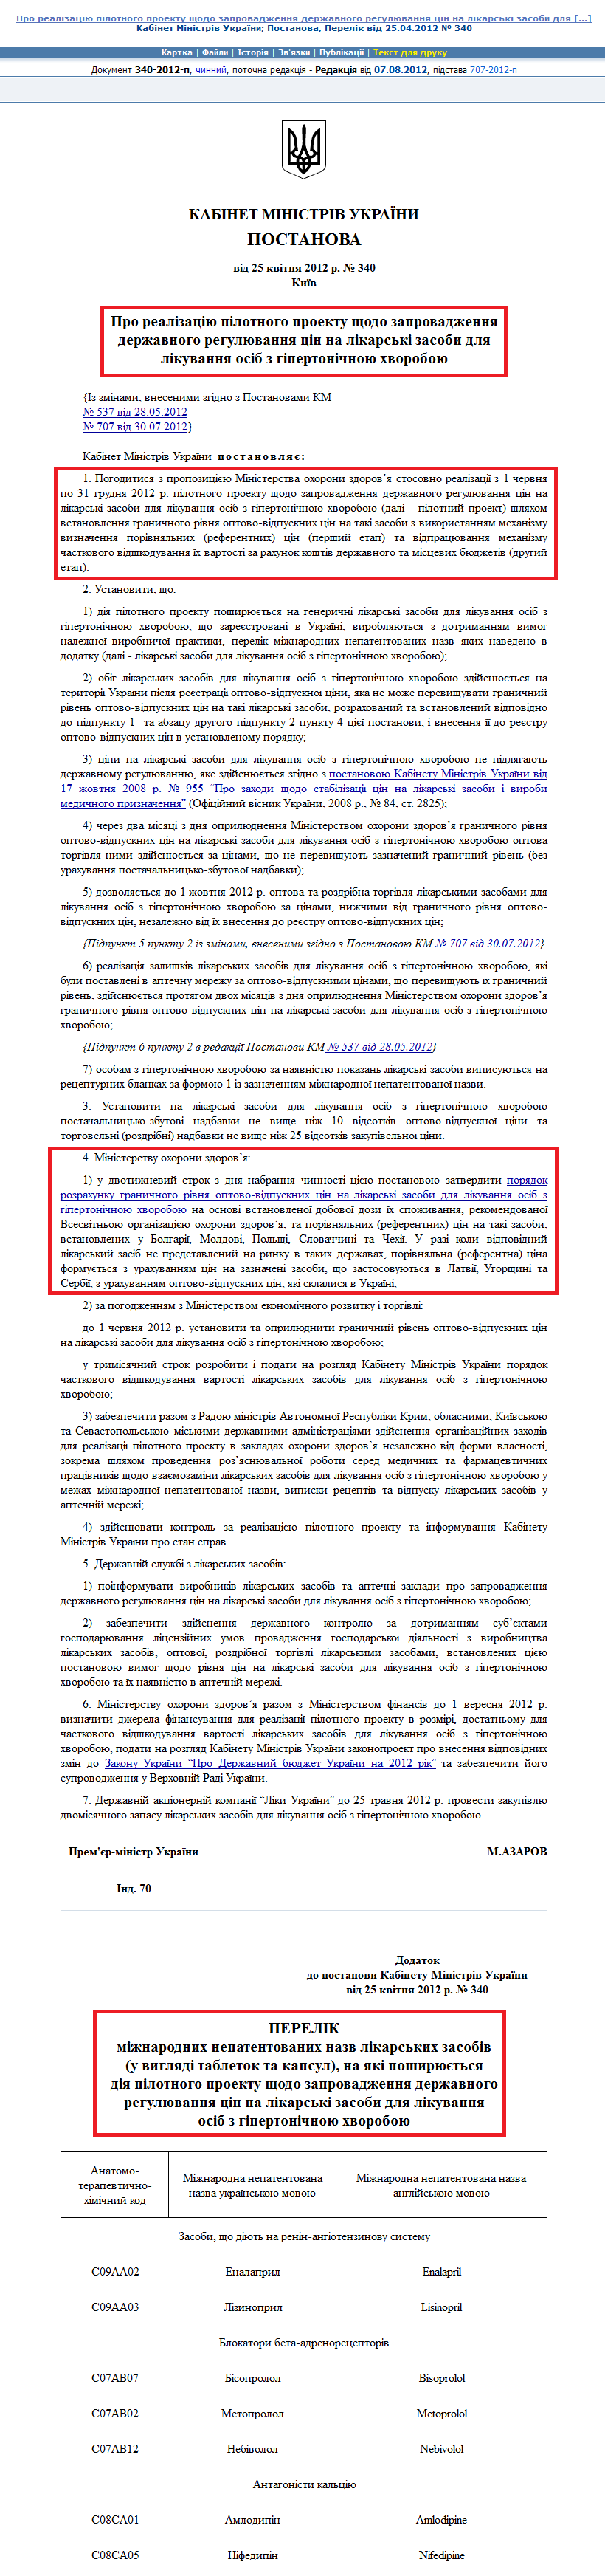 http://zakon3.rada.gov.ua/laws/show/340-2012-%D0%BF/ed20120807